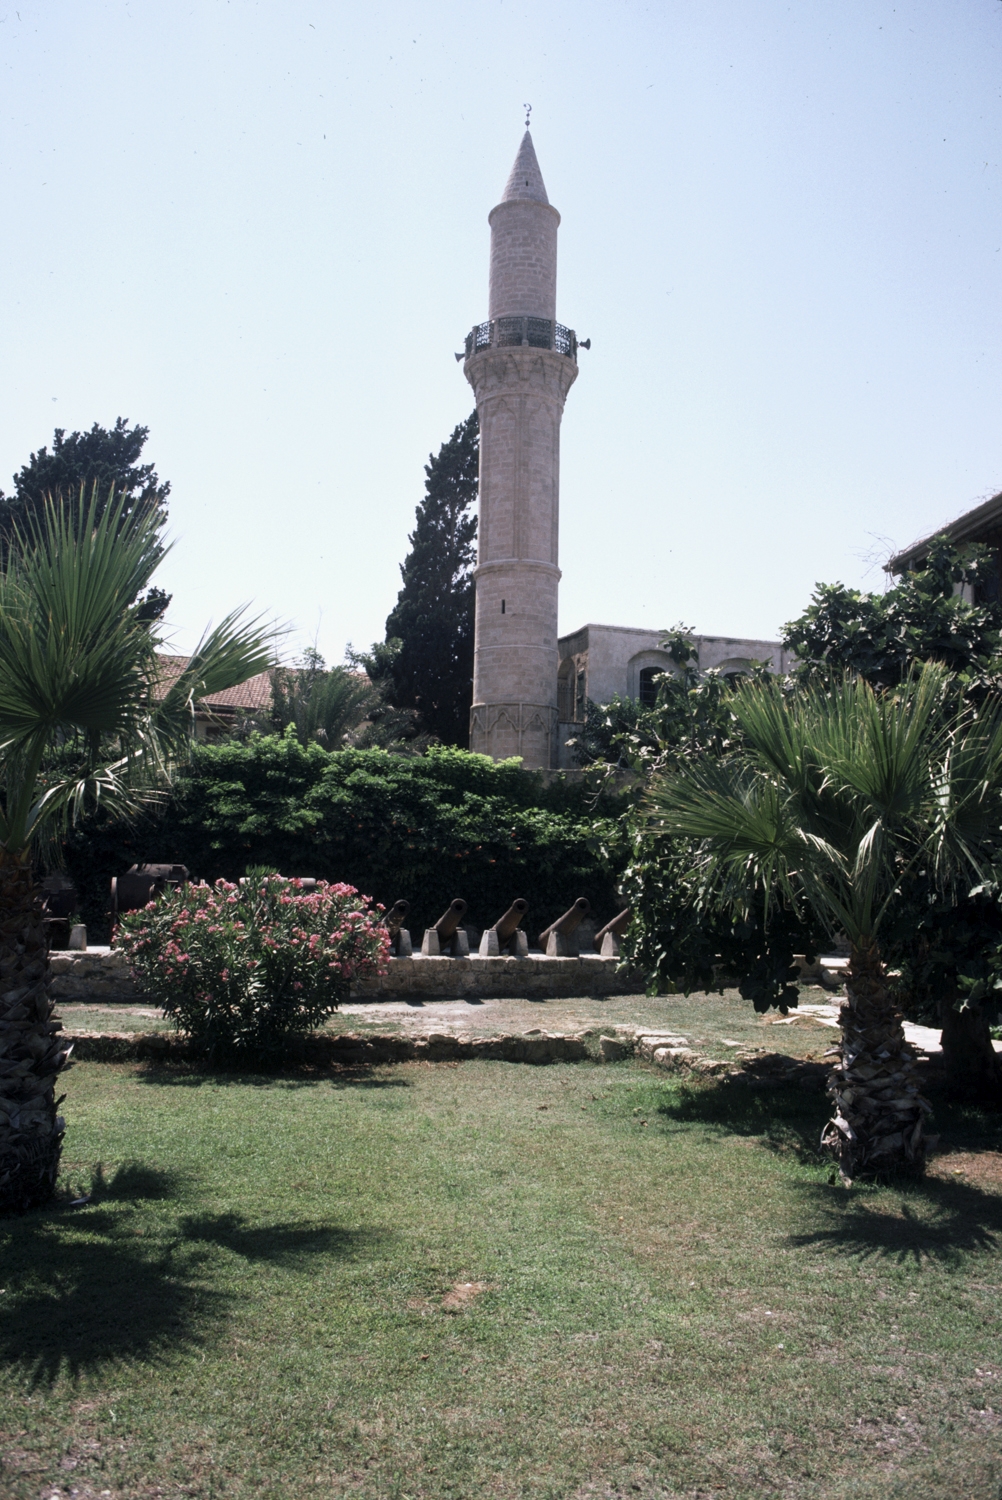 View from garden, minaret at southeast corner